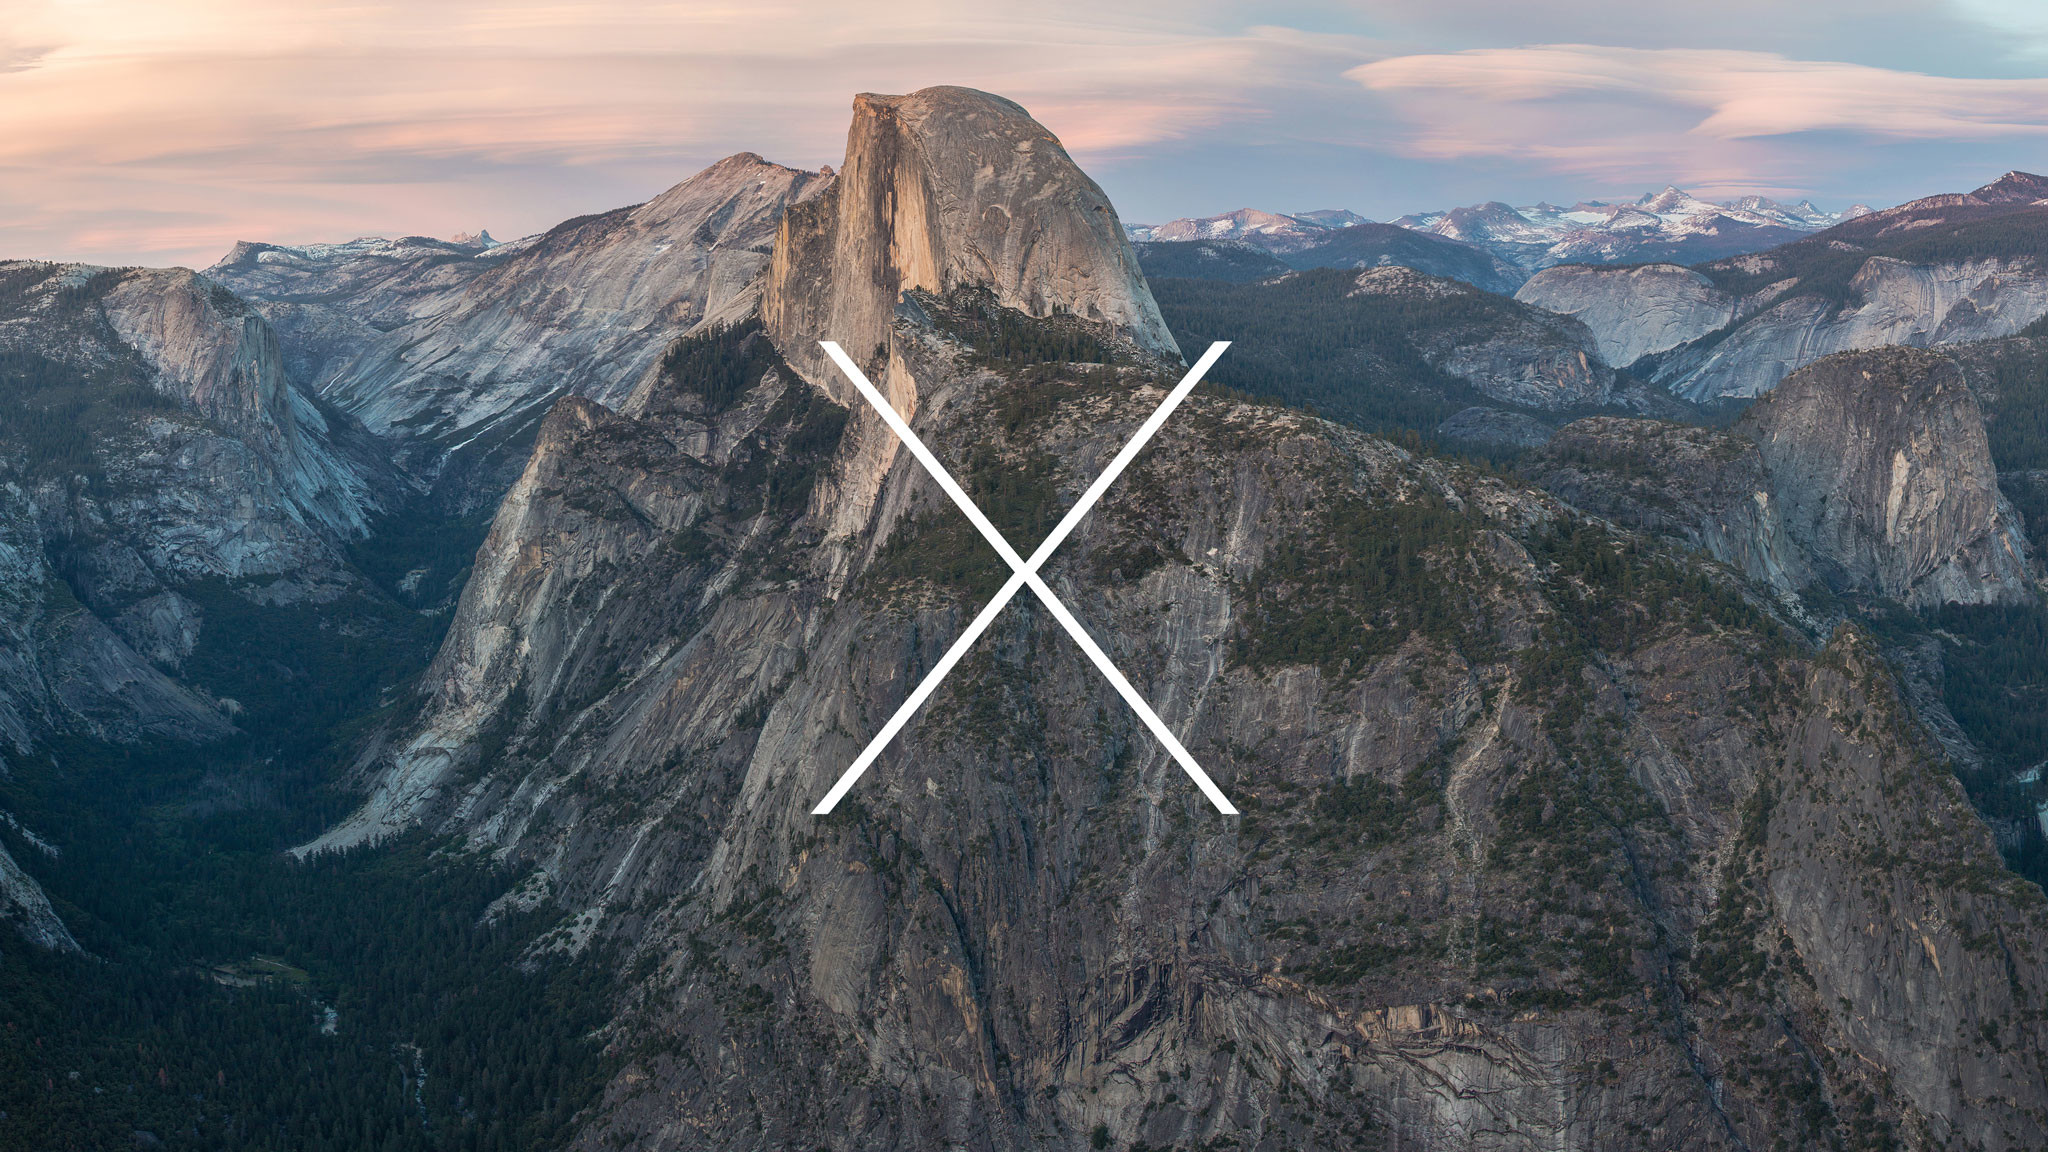 Download 21 yosemite-ipad-wallpaper Download-Half-dome,-Yosemite-valley,-national-park-wallpaper-.jpg